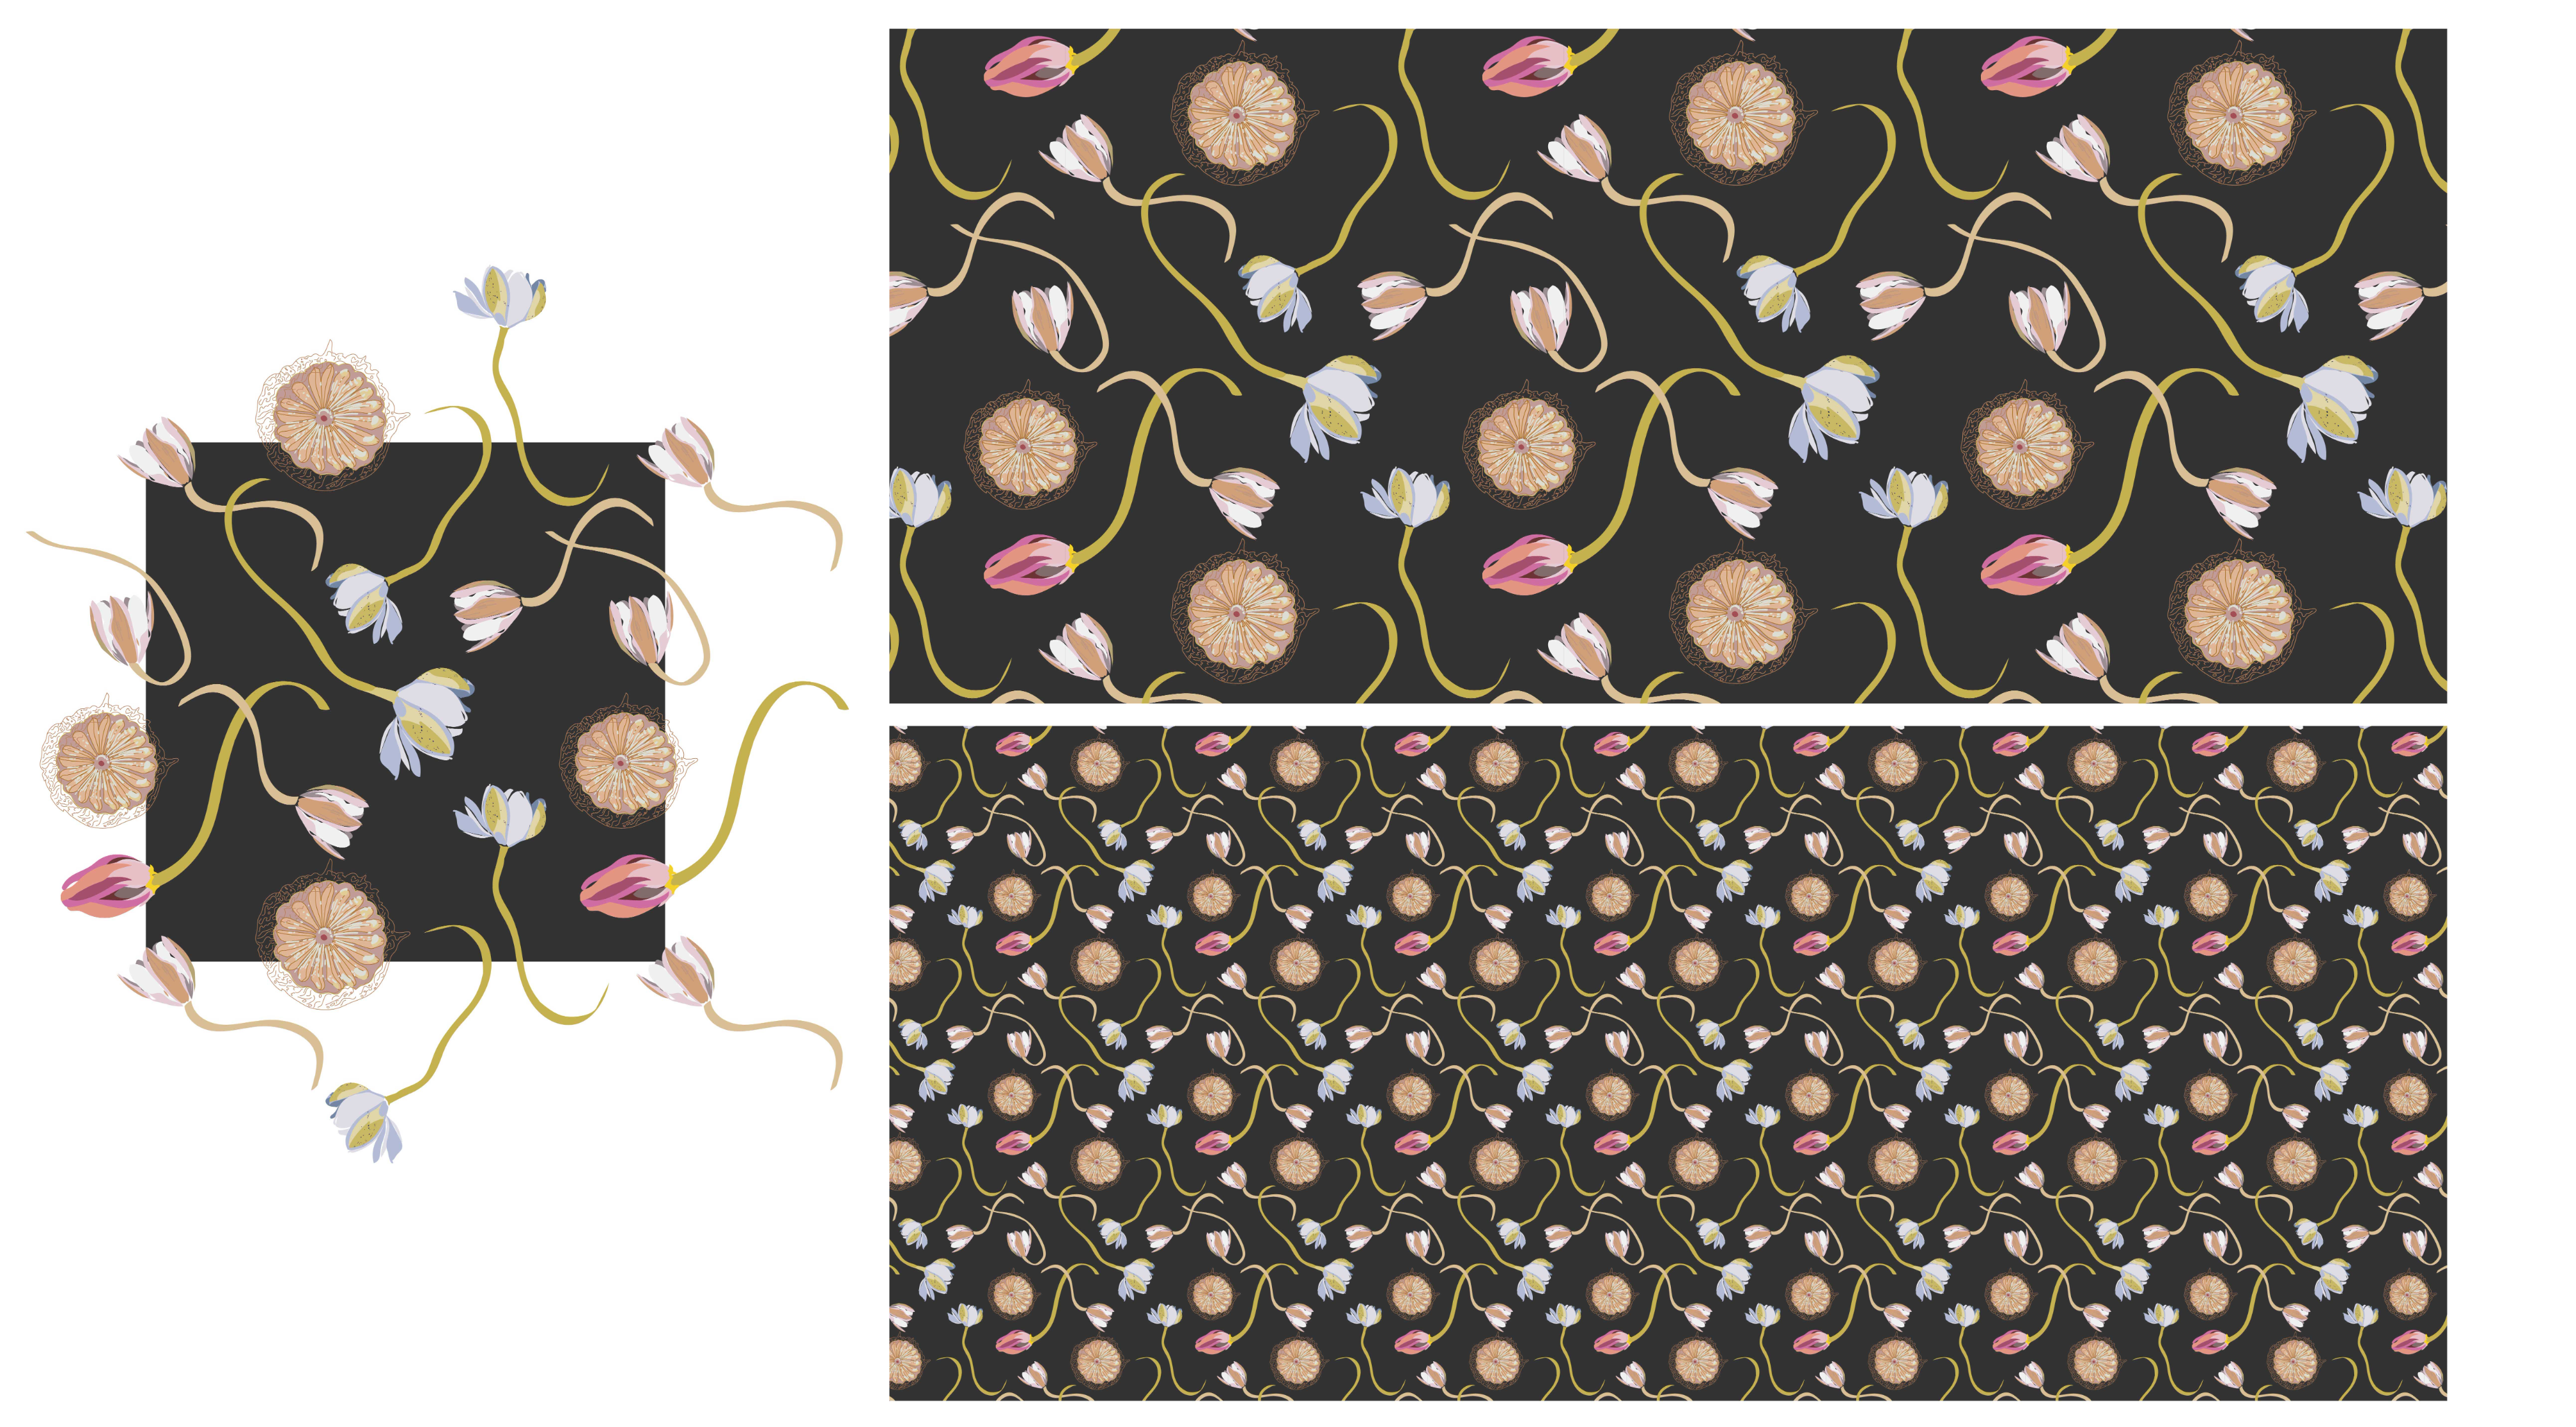 Native Waterlily Flowers 2021, hand drawn digital surface pattern.